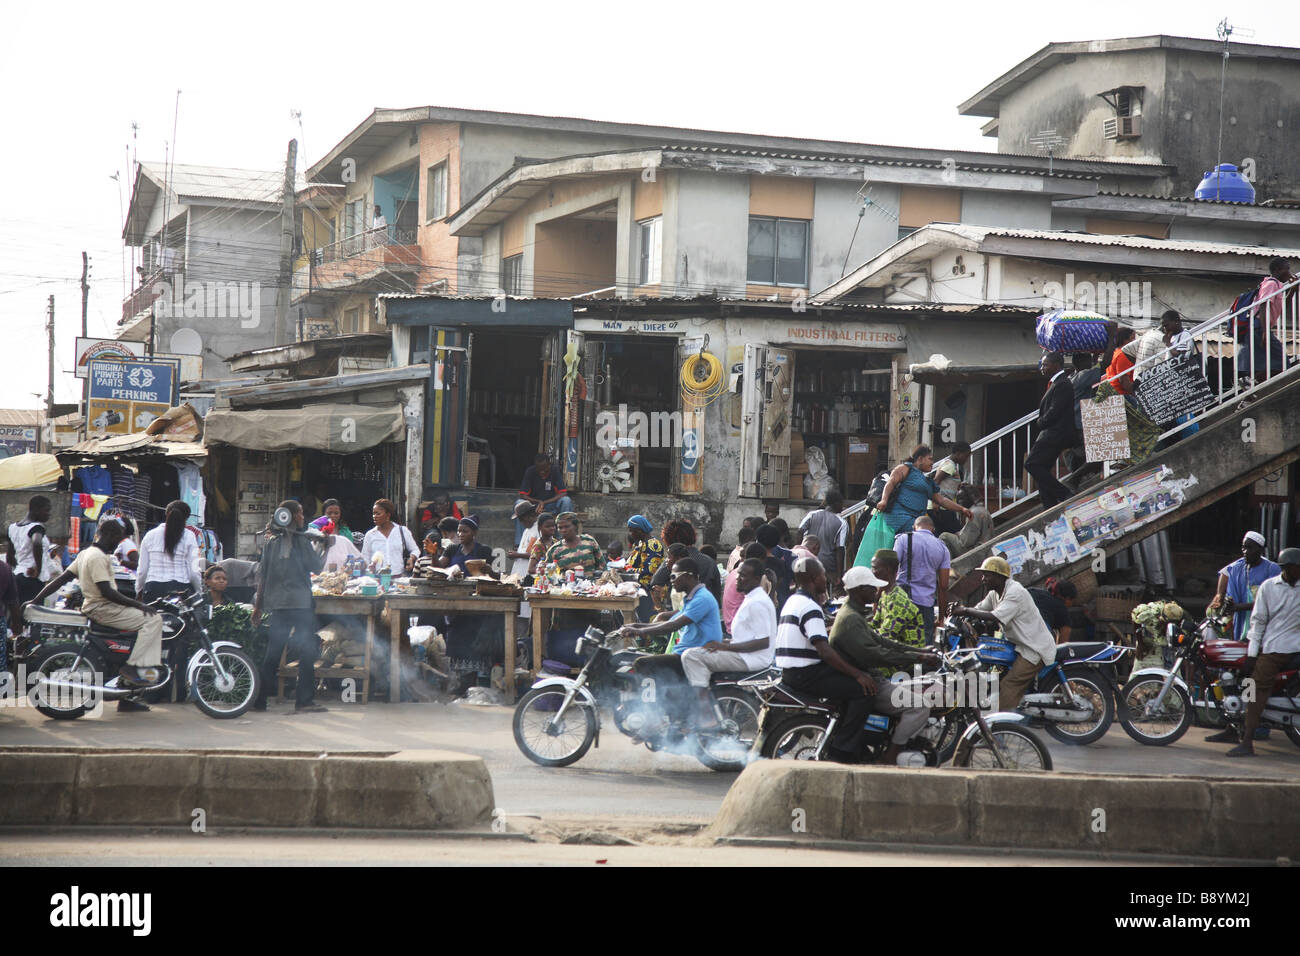 Rifiuti elettronici in Nigeria. Tonnellate di rifiuti elettronici dai paesi occidentali a finire in Africa occidentale, tra cui la Nigeria. Foto Stock